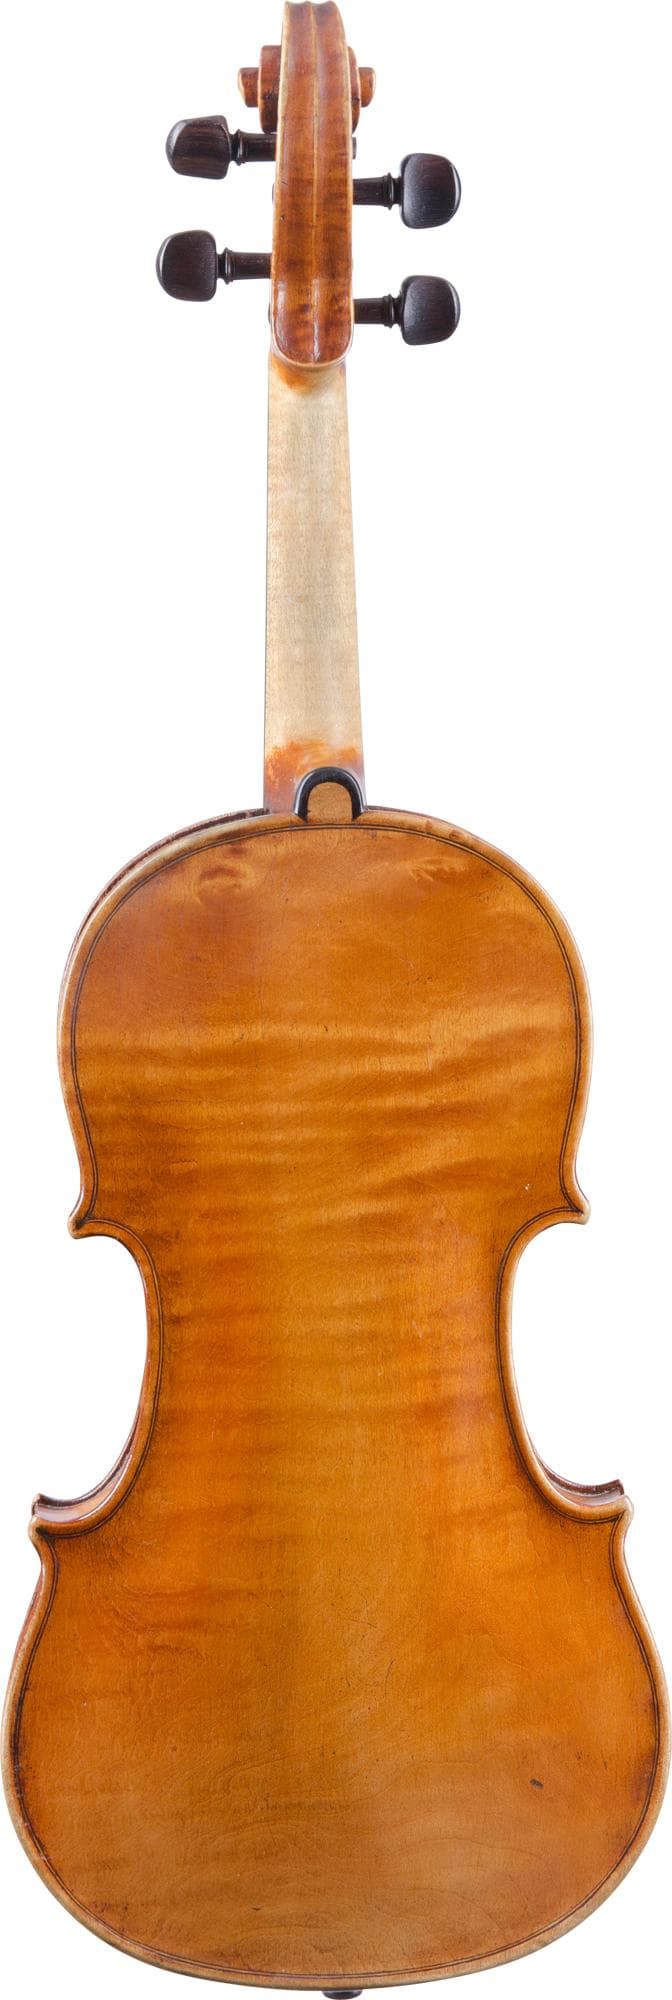 William Booth Violin, England, 1831